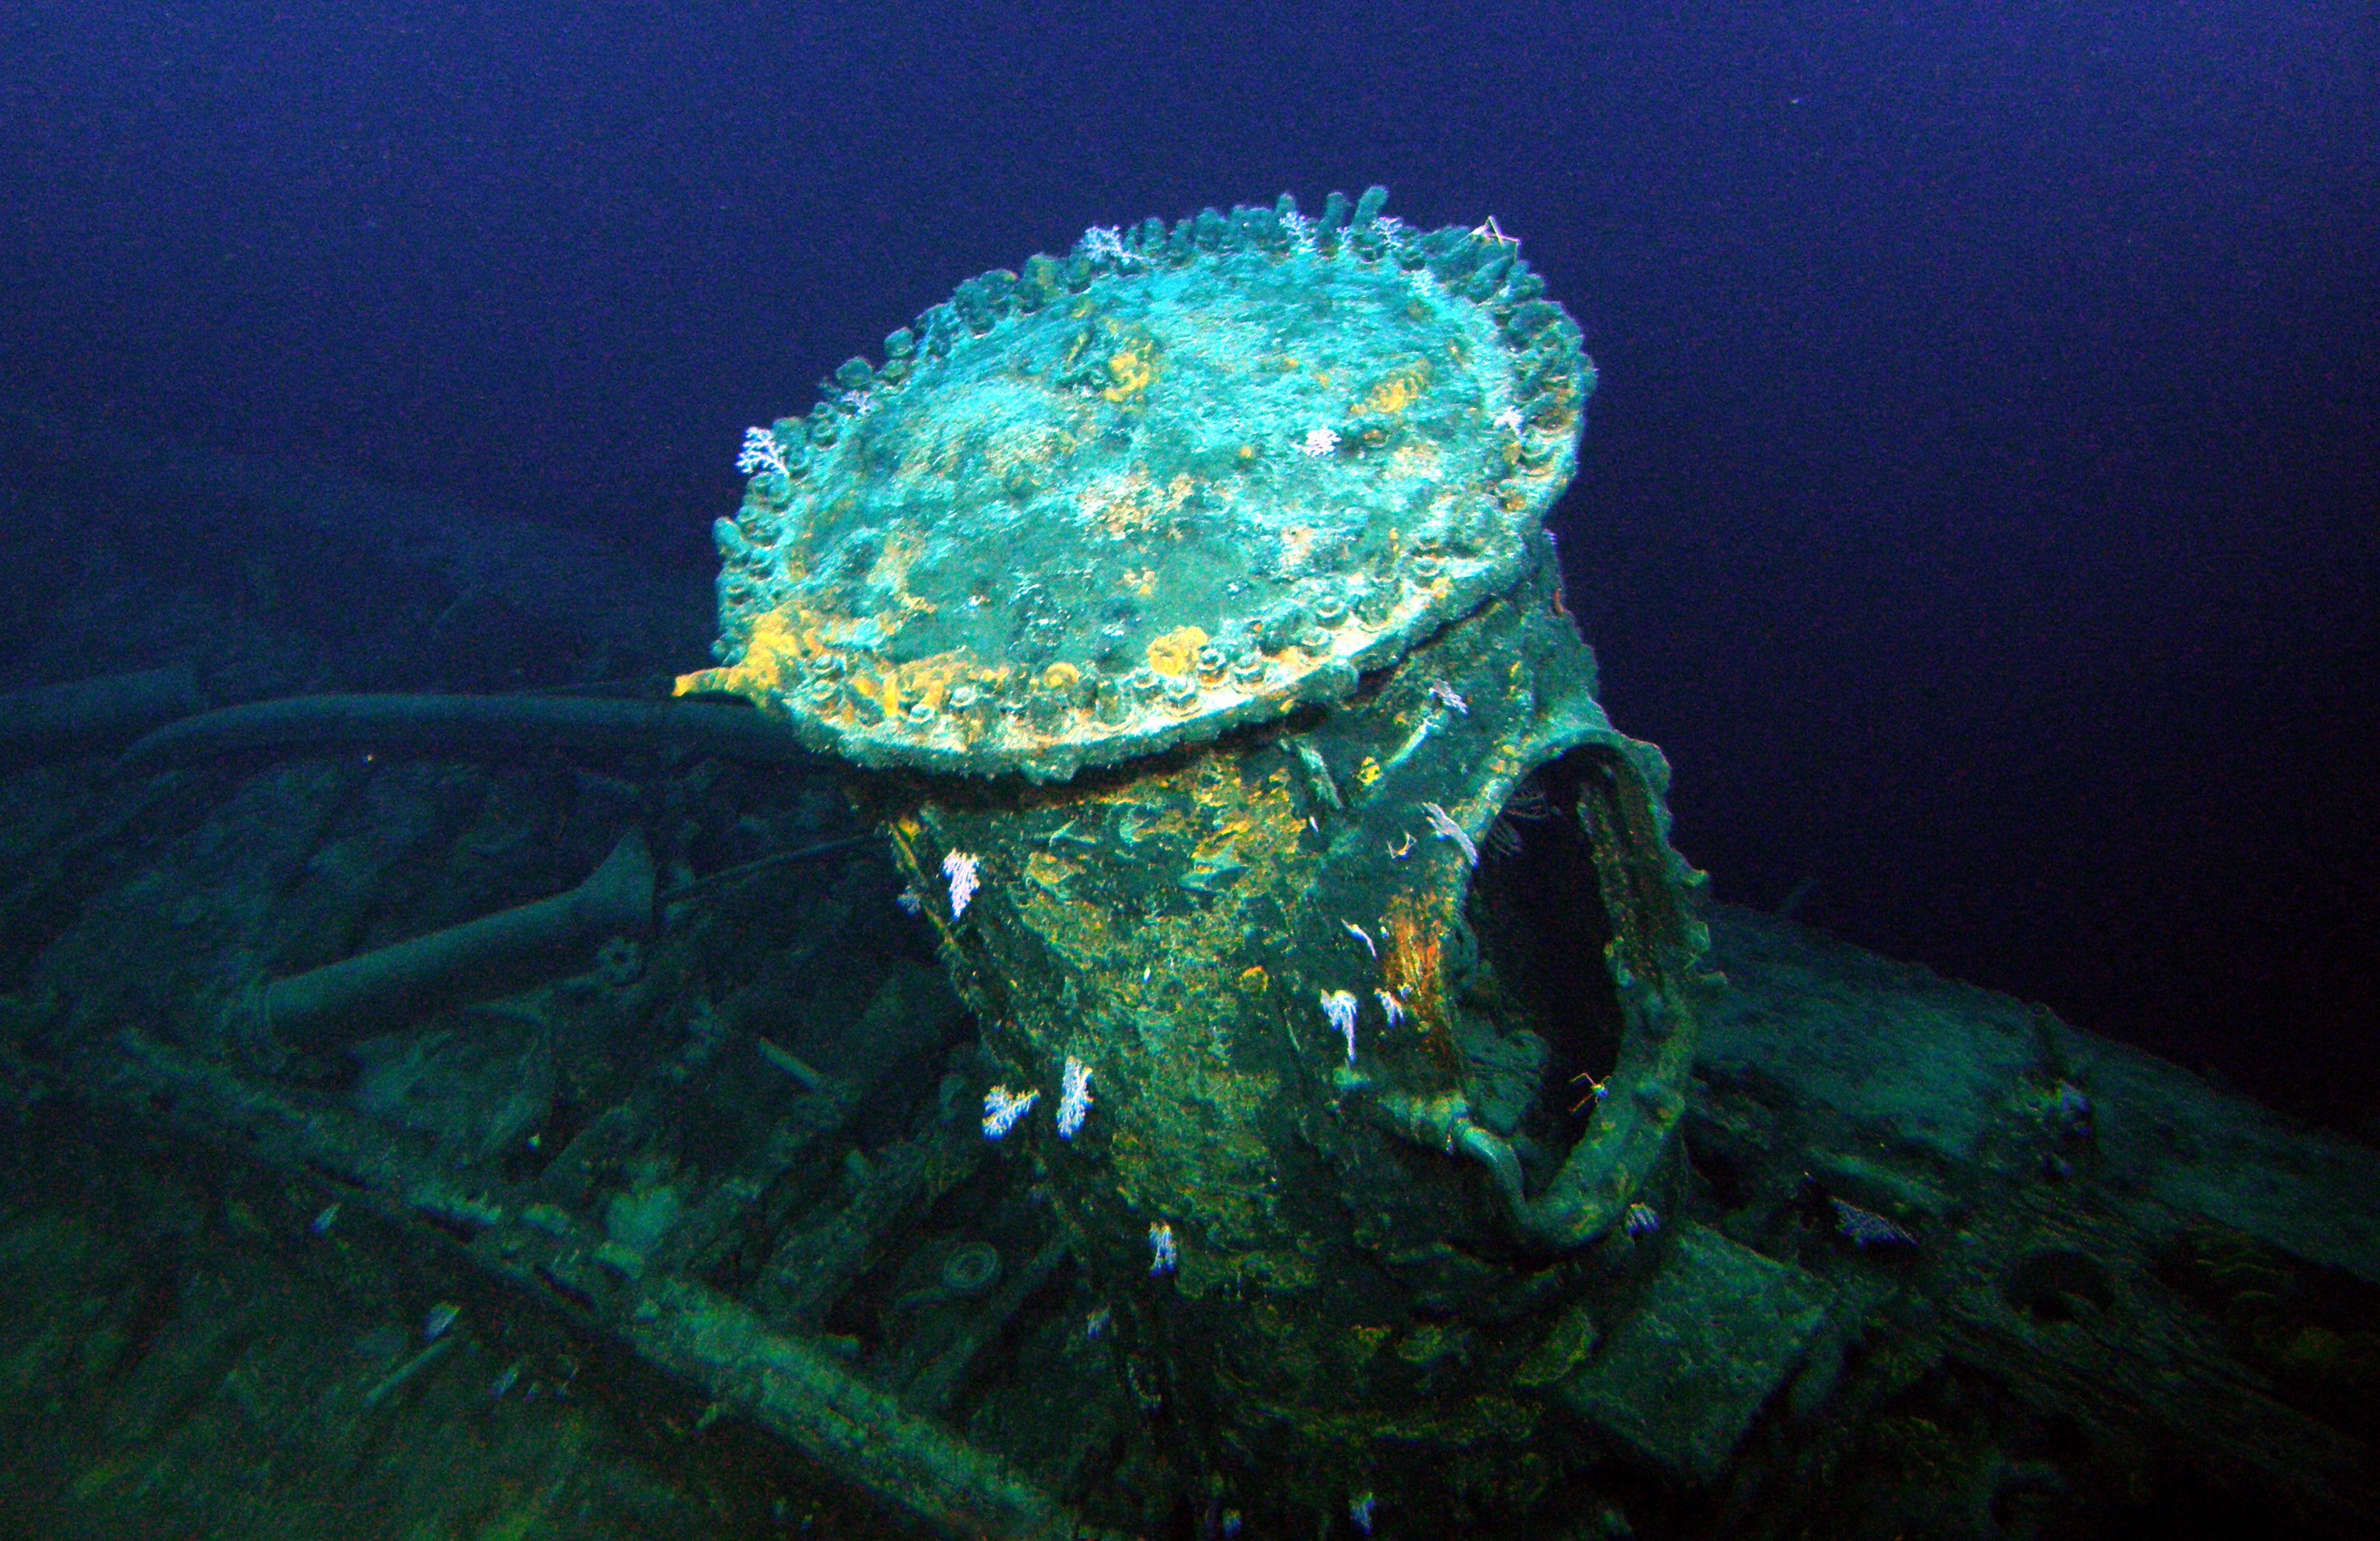 Az S-4 2011-ben (Hawaii Undersea Research Laboratory)